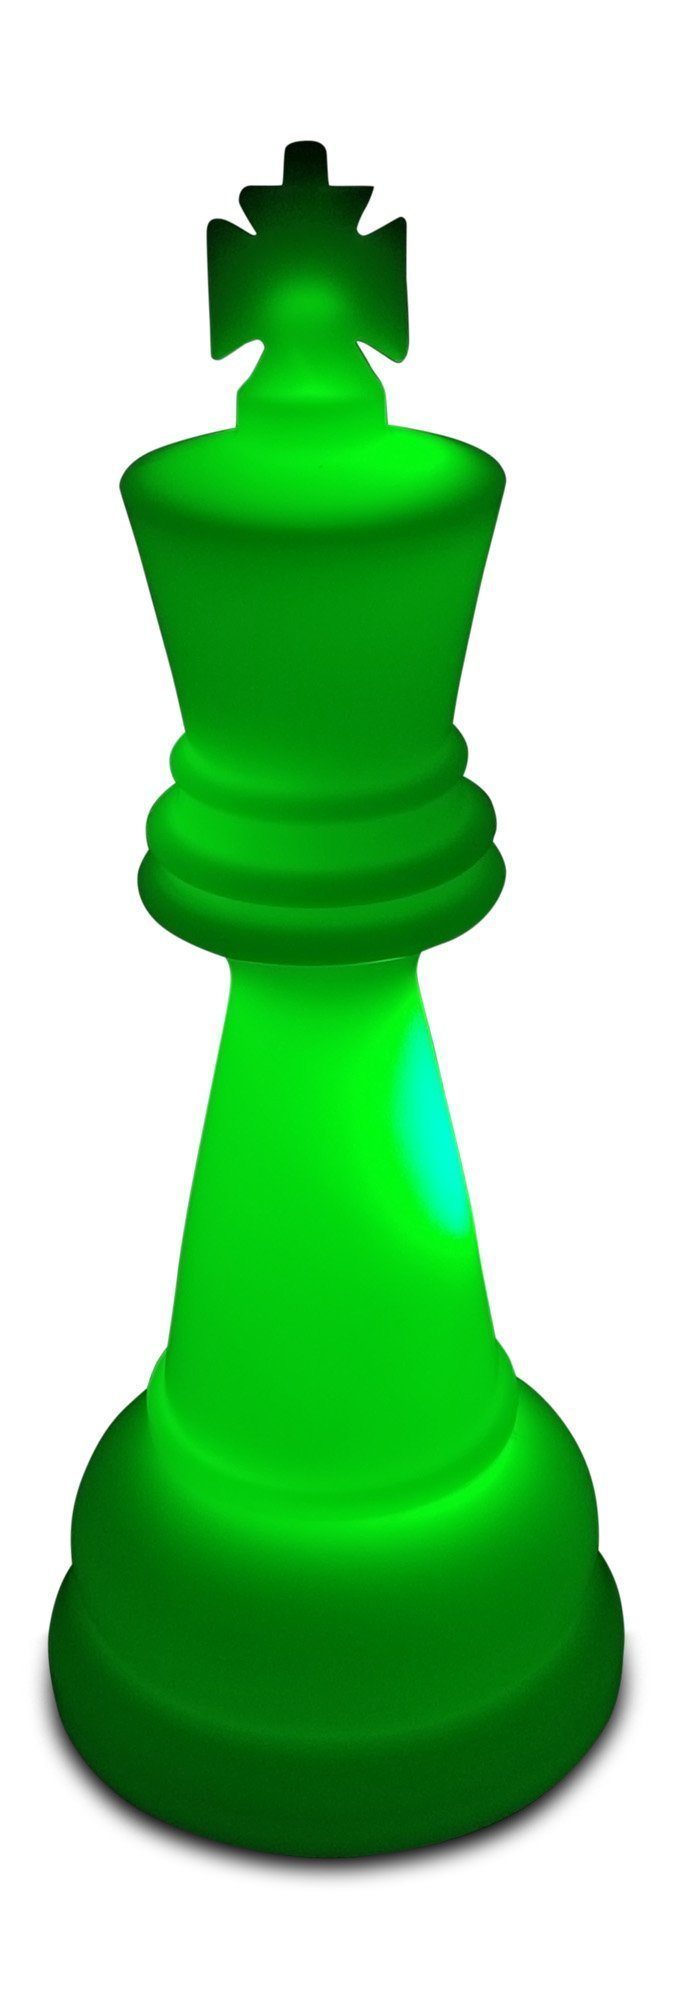 MegaChess 26 Inch Premium Plastic King Light-Up Giant Chess Piece - Green |  | GiantChessUSA